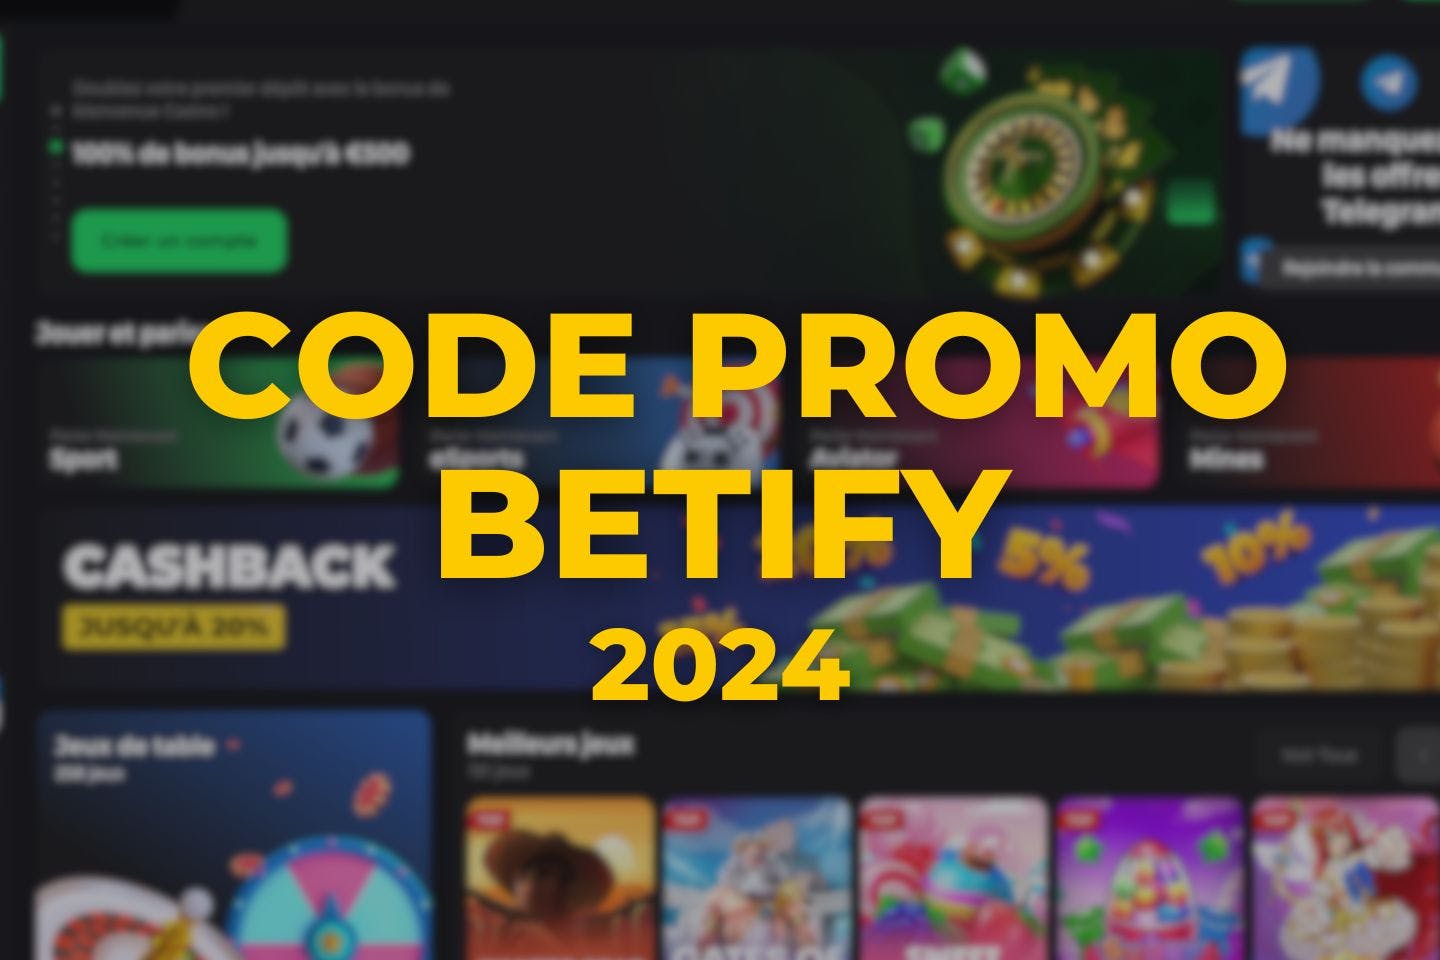 Code Promo Betify 2024